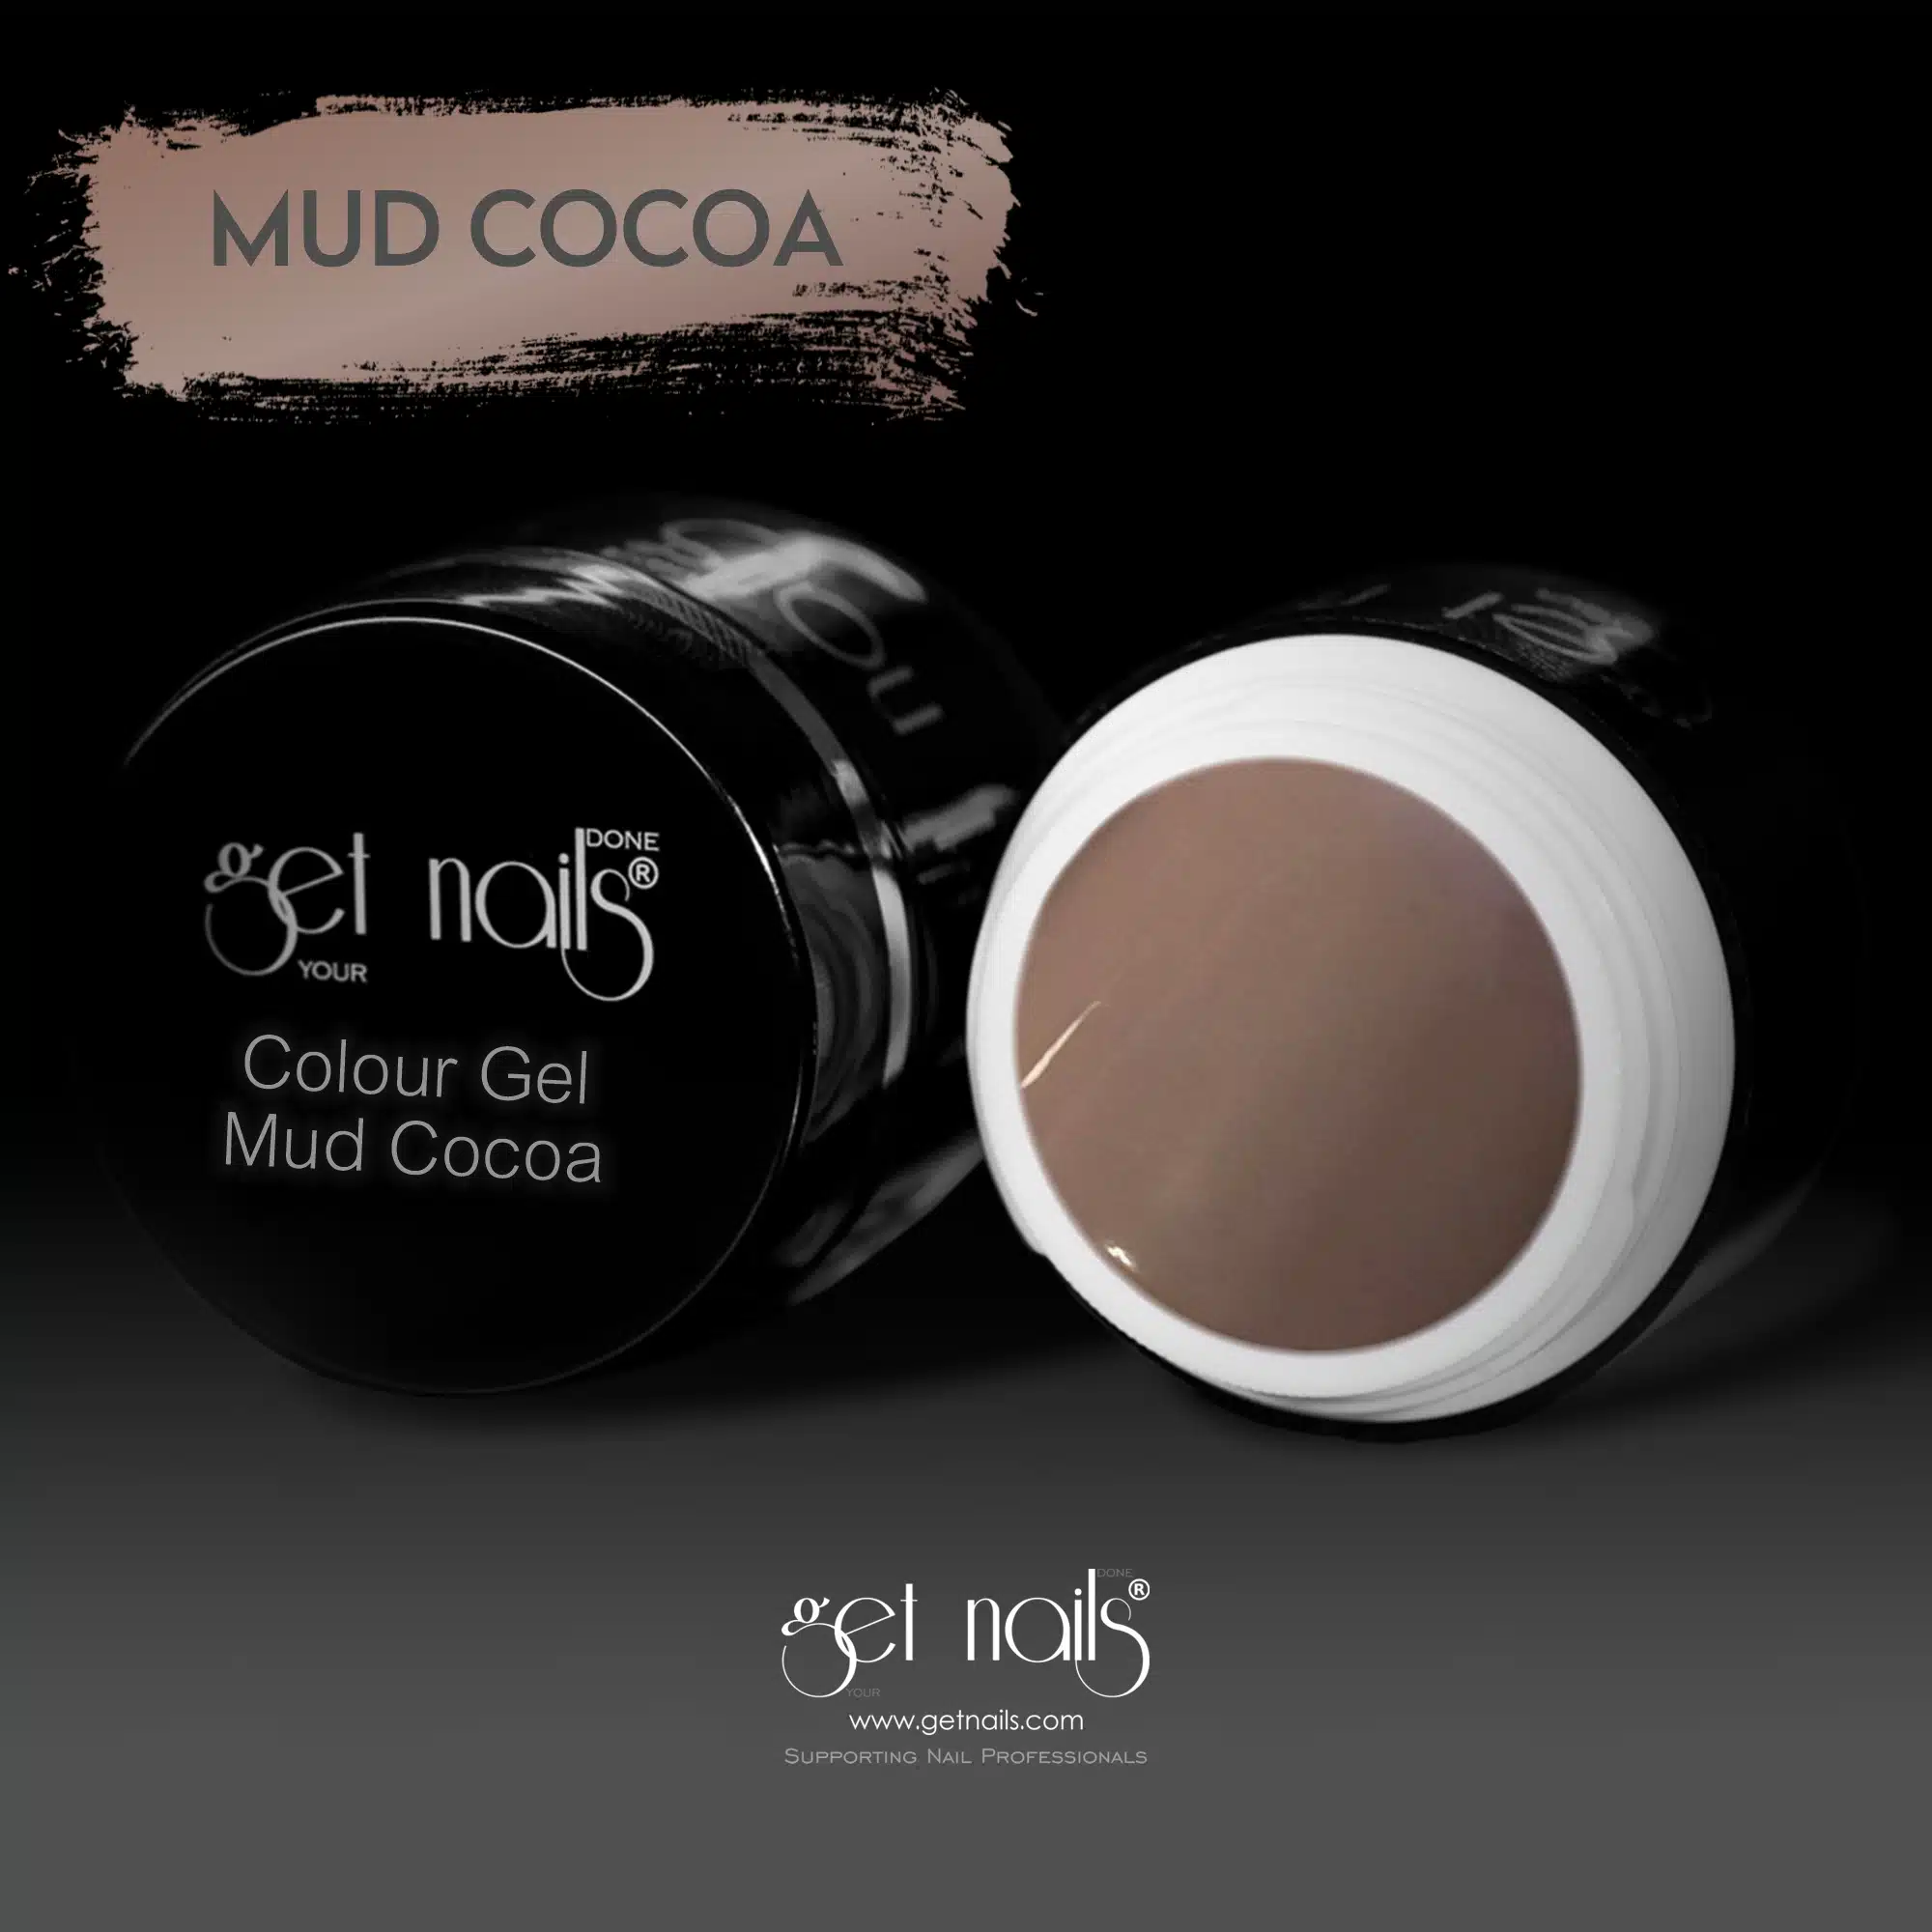 Get Nails Austria - Colour Gel Mud Cocoa 5g